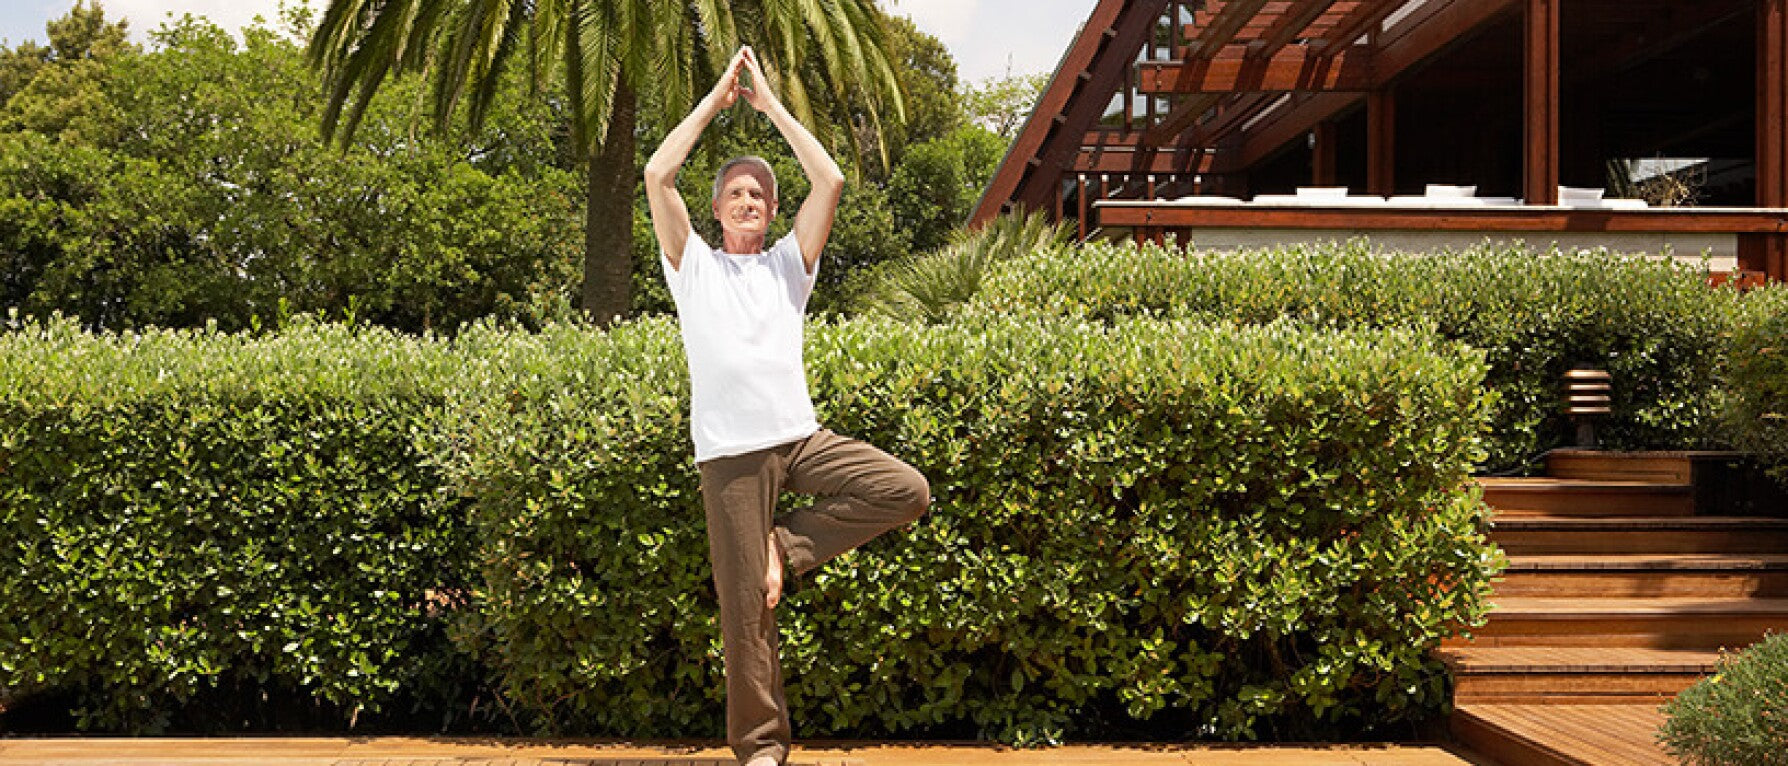 9 Basic Yoga Poses For Beginners | Basic yoga poses, Yoga for beginners,  Yoga tips